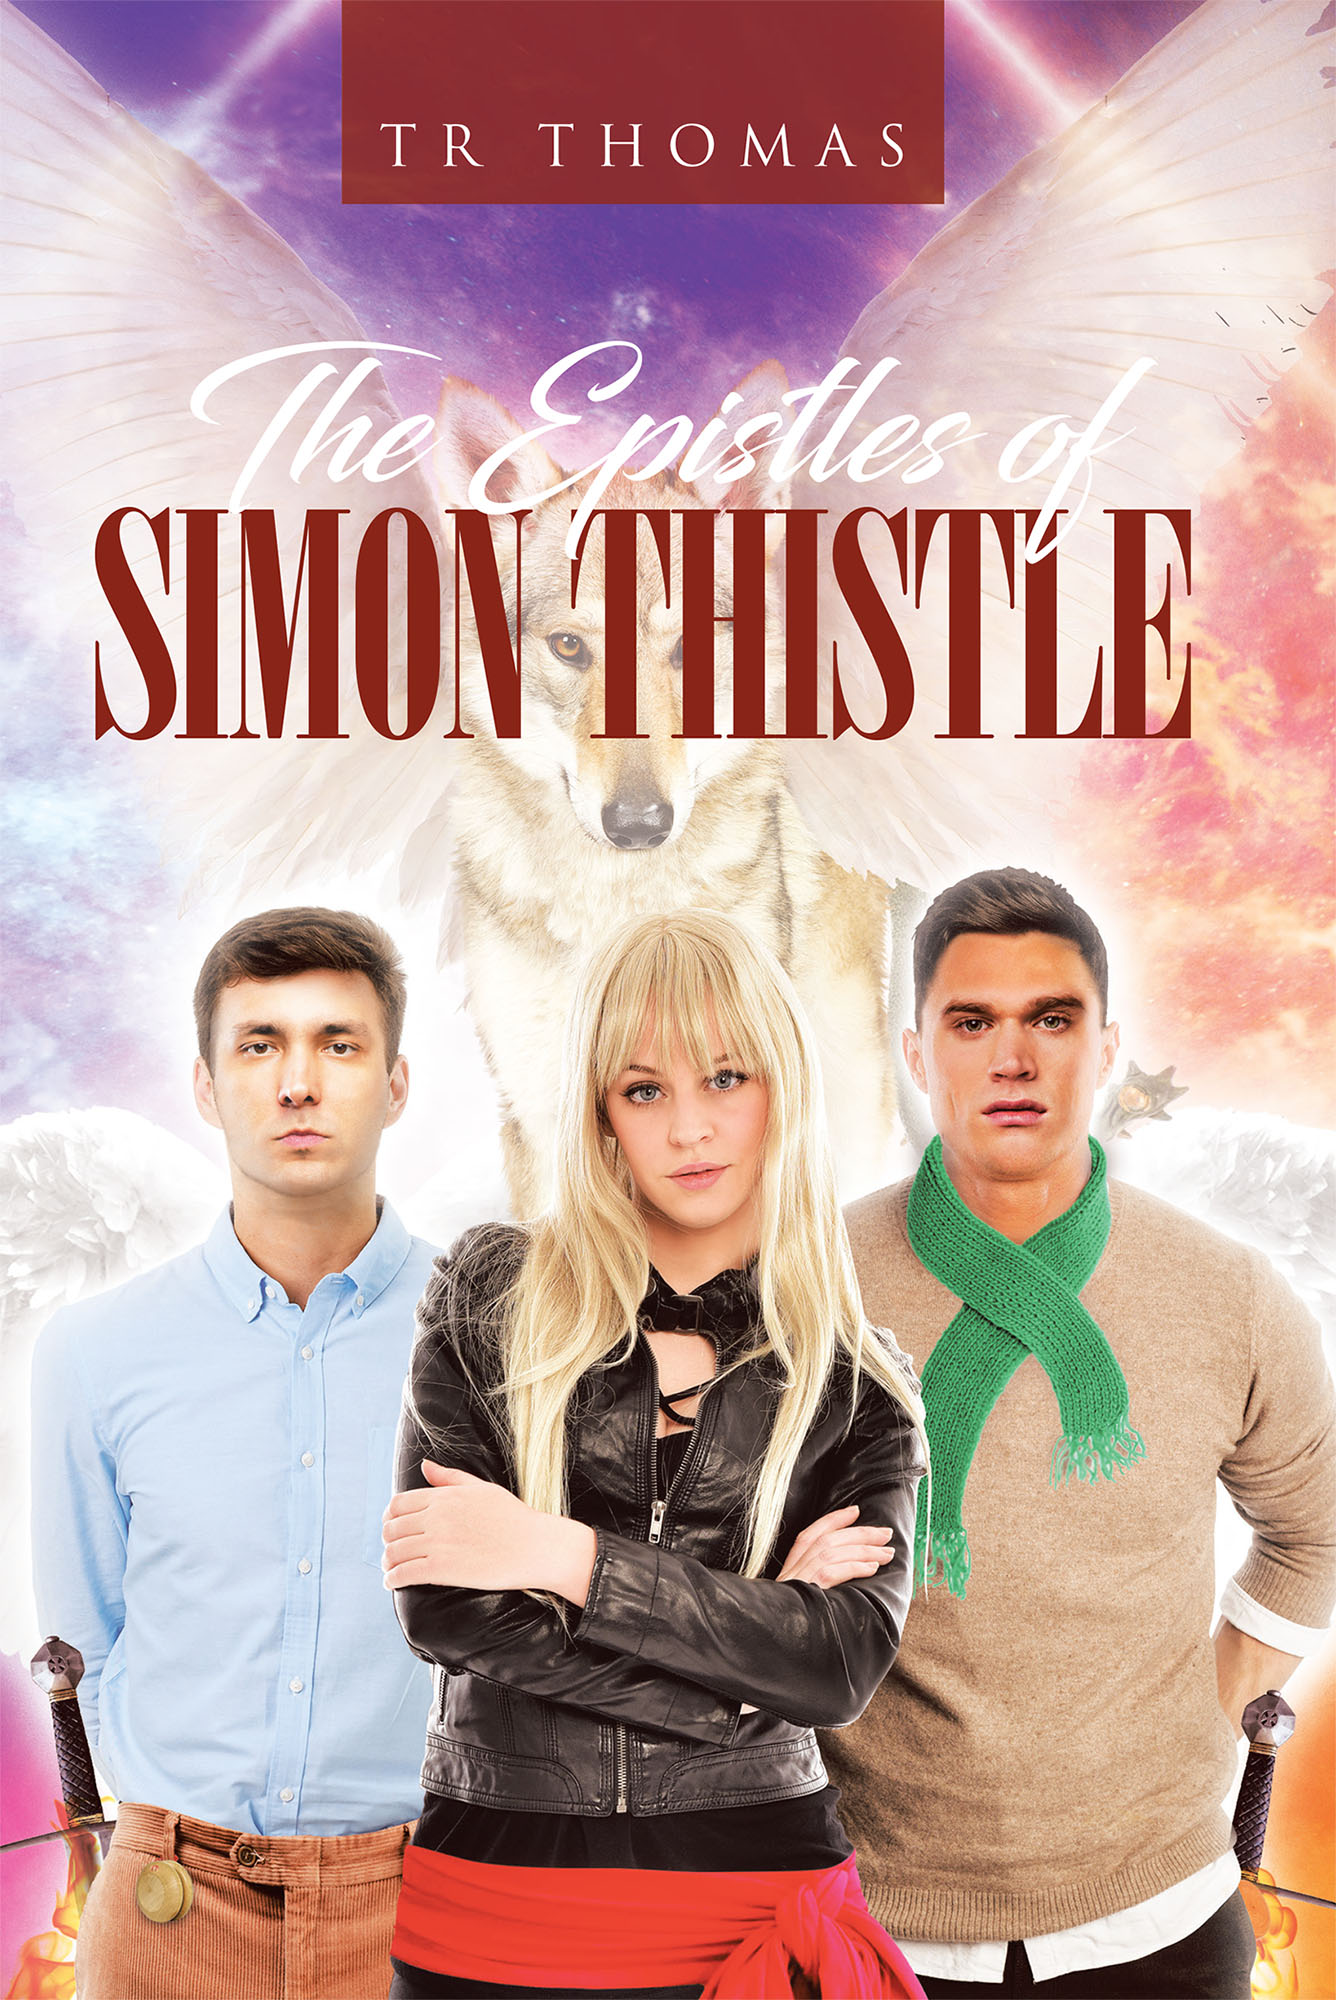 The Epistles of Simon Thistle Cover Image